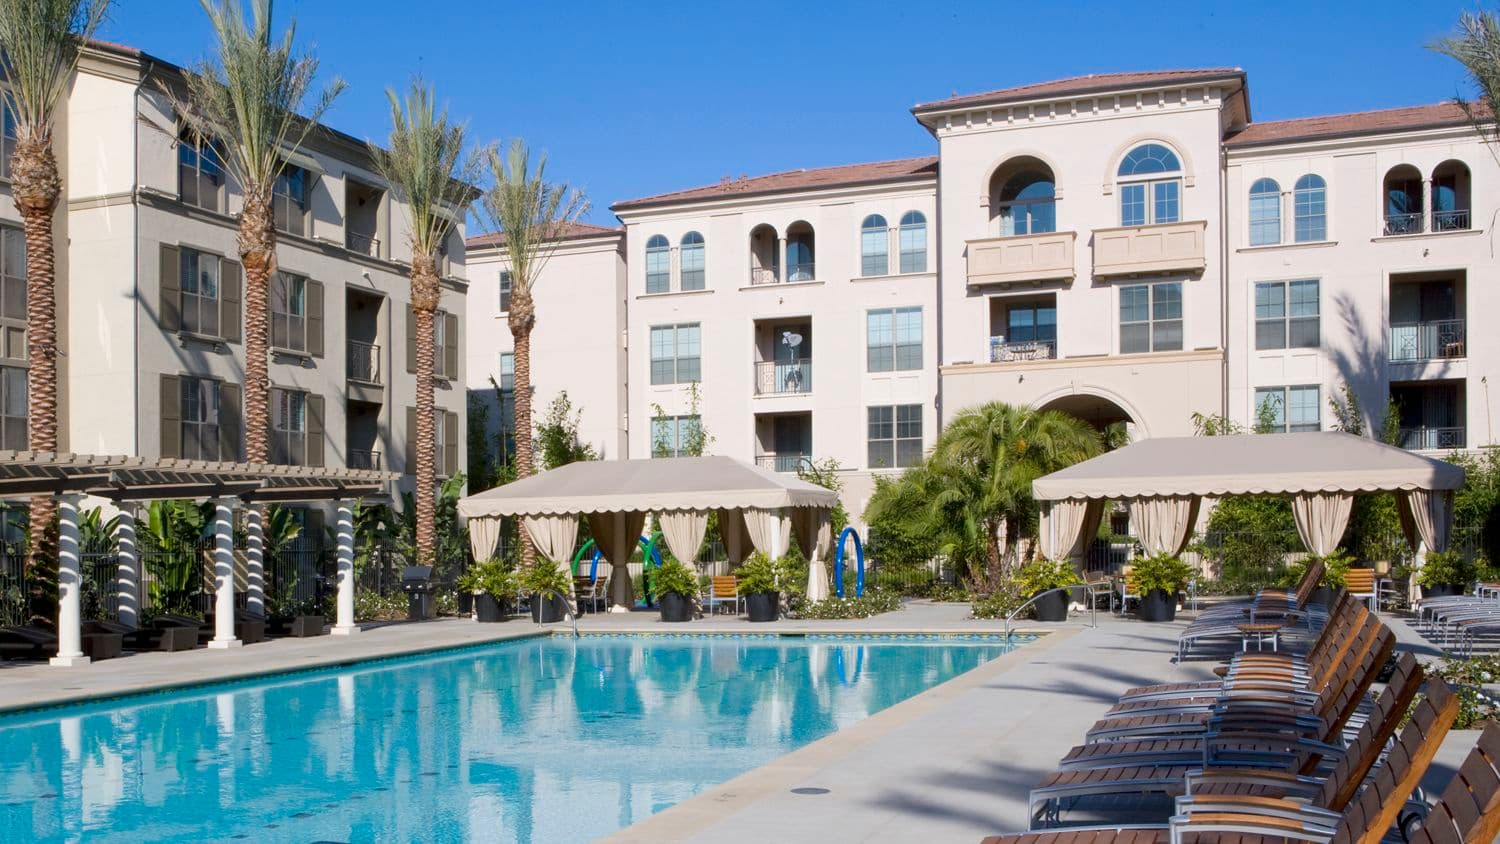 Exterior view of pool at The Village Delrey at Irvine Spectrum Apartment Homes in Irvine, CA.